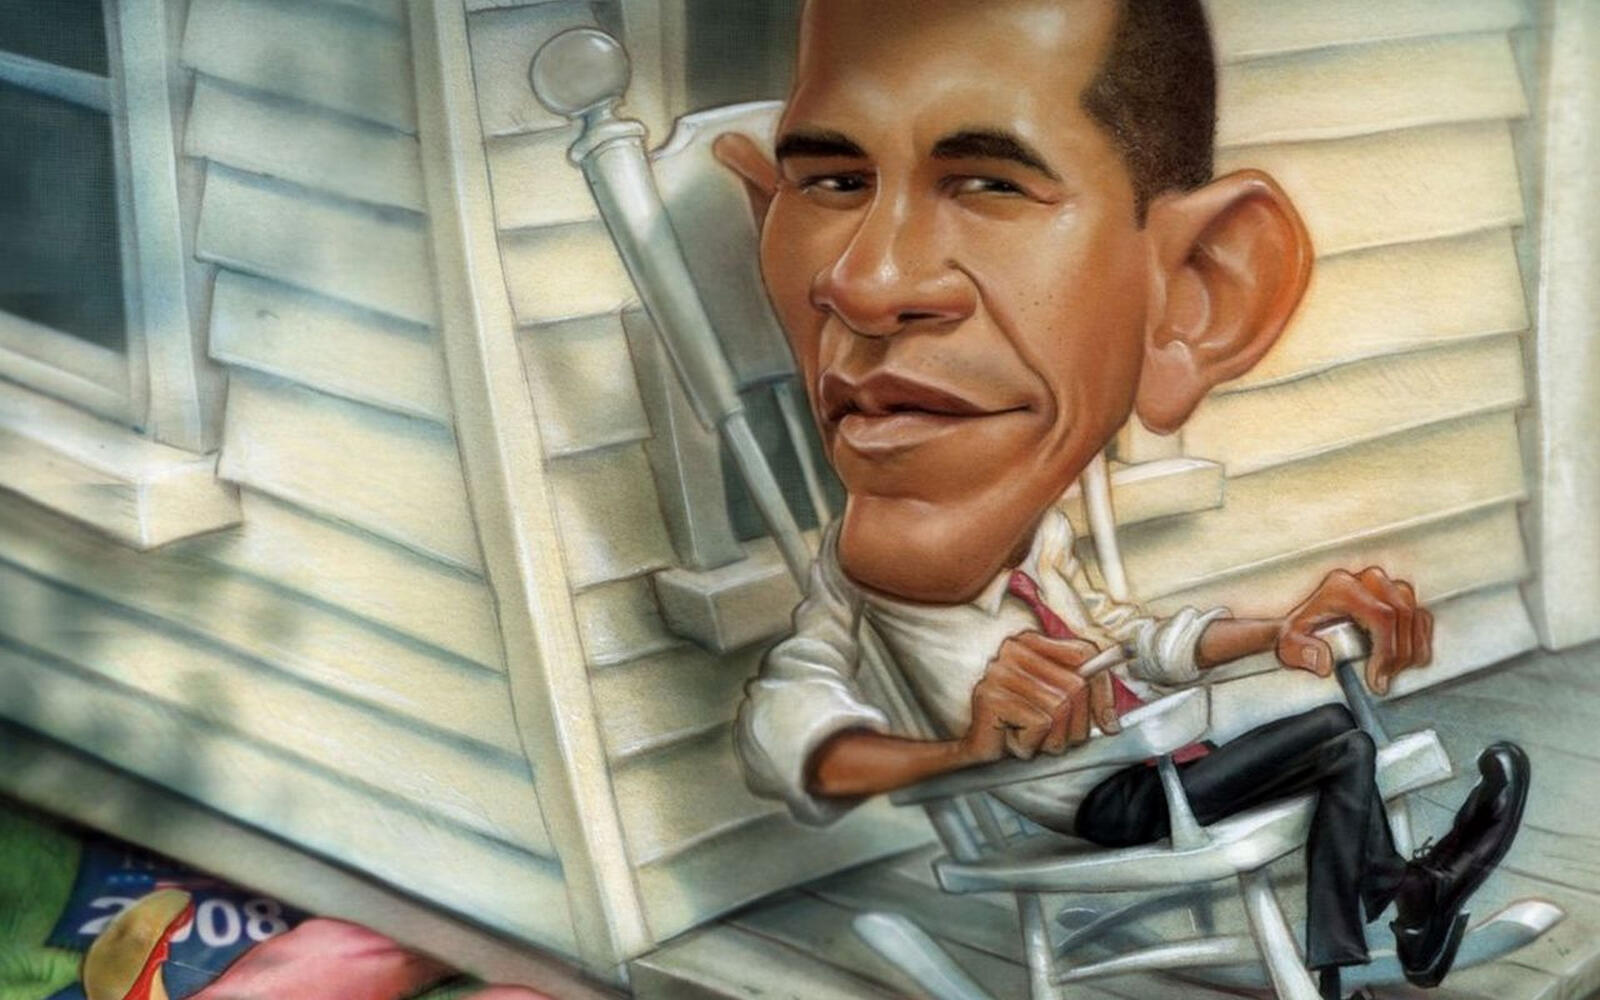 Wallpapers drawing cartoon barack obama on the desktop